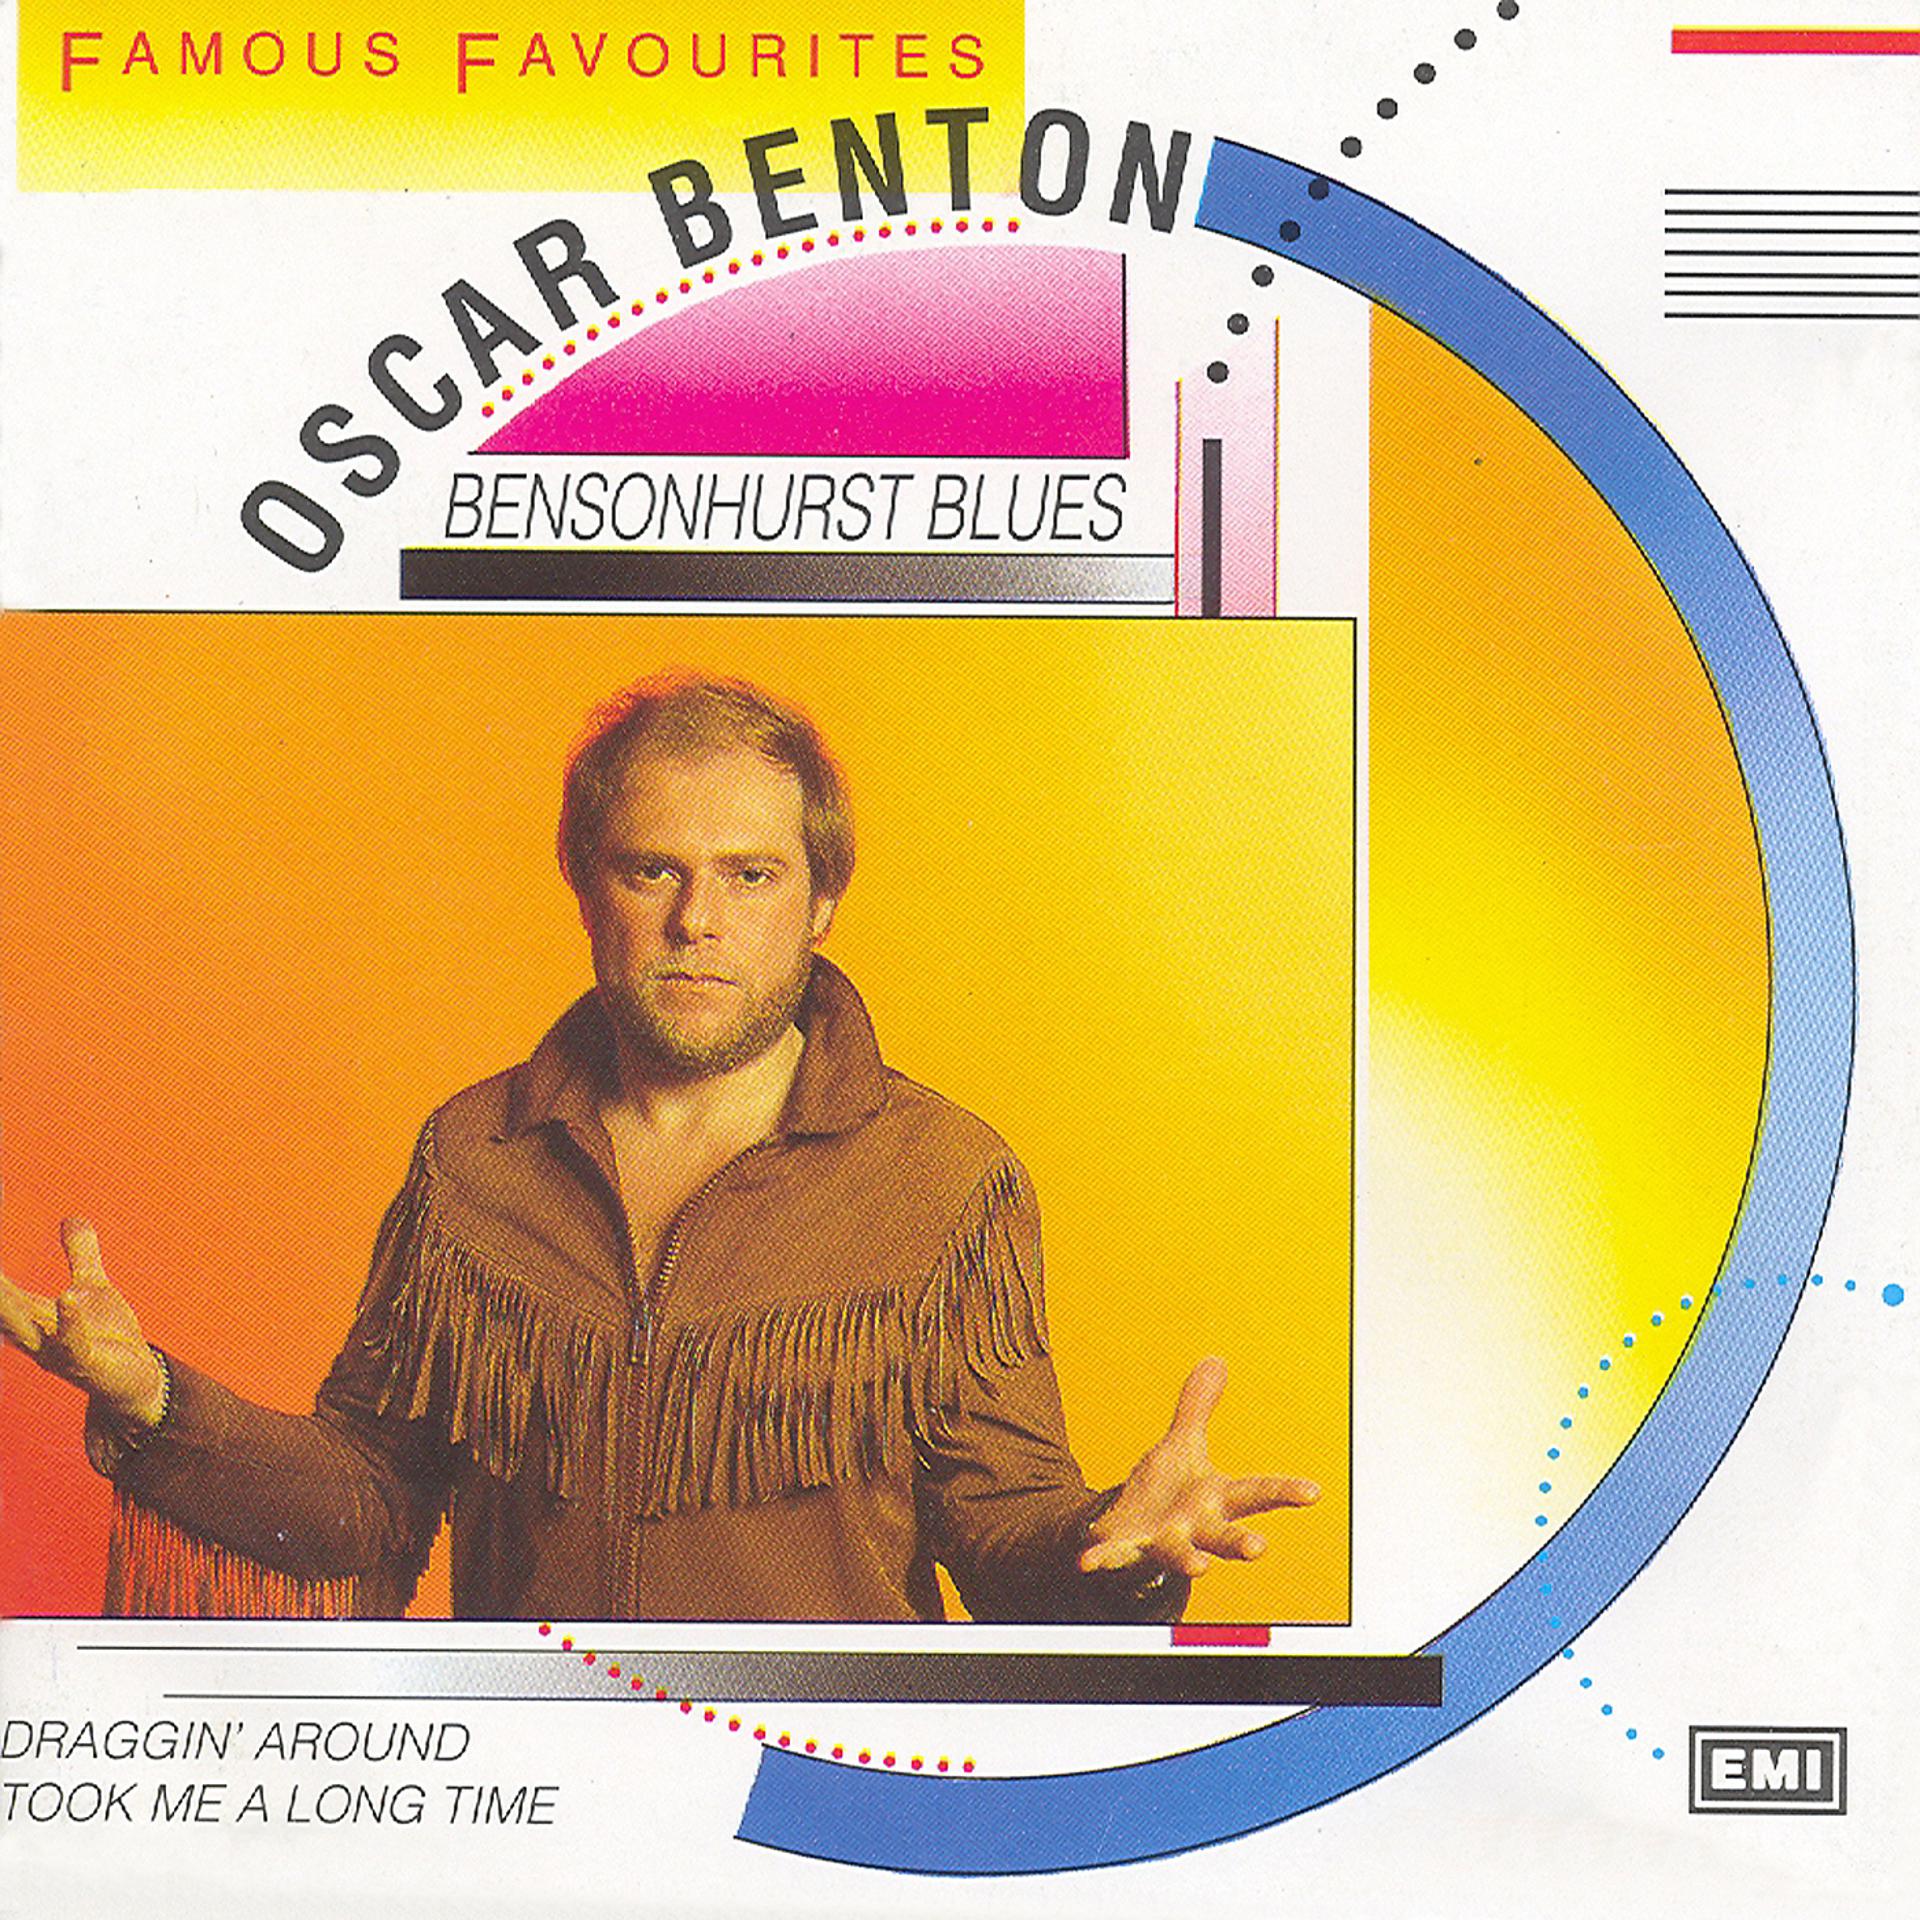 Оскар Бентон. Оскар Бентон бенсонхёрст. Bensonhurst Blues Оскар Бентон. Bensonhurst Blues Oscar Benton album 1973.